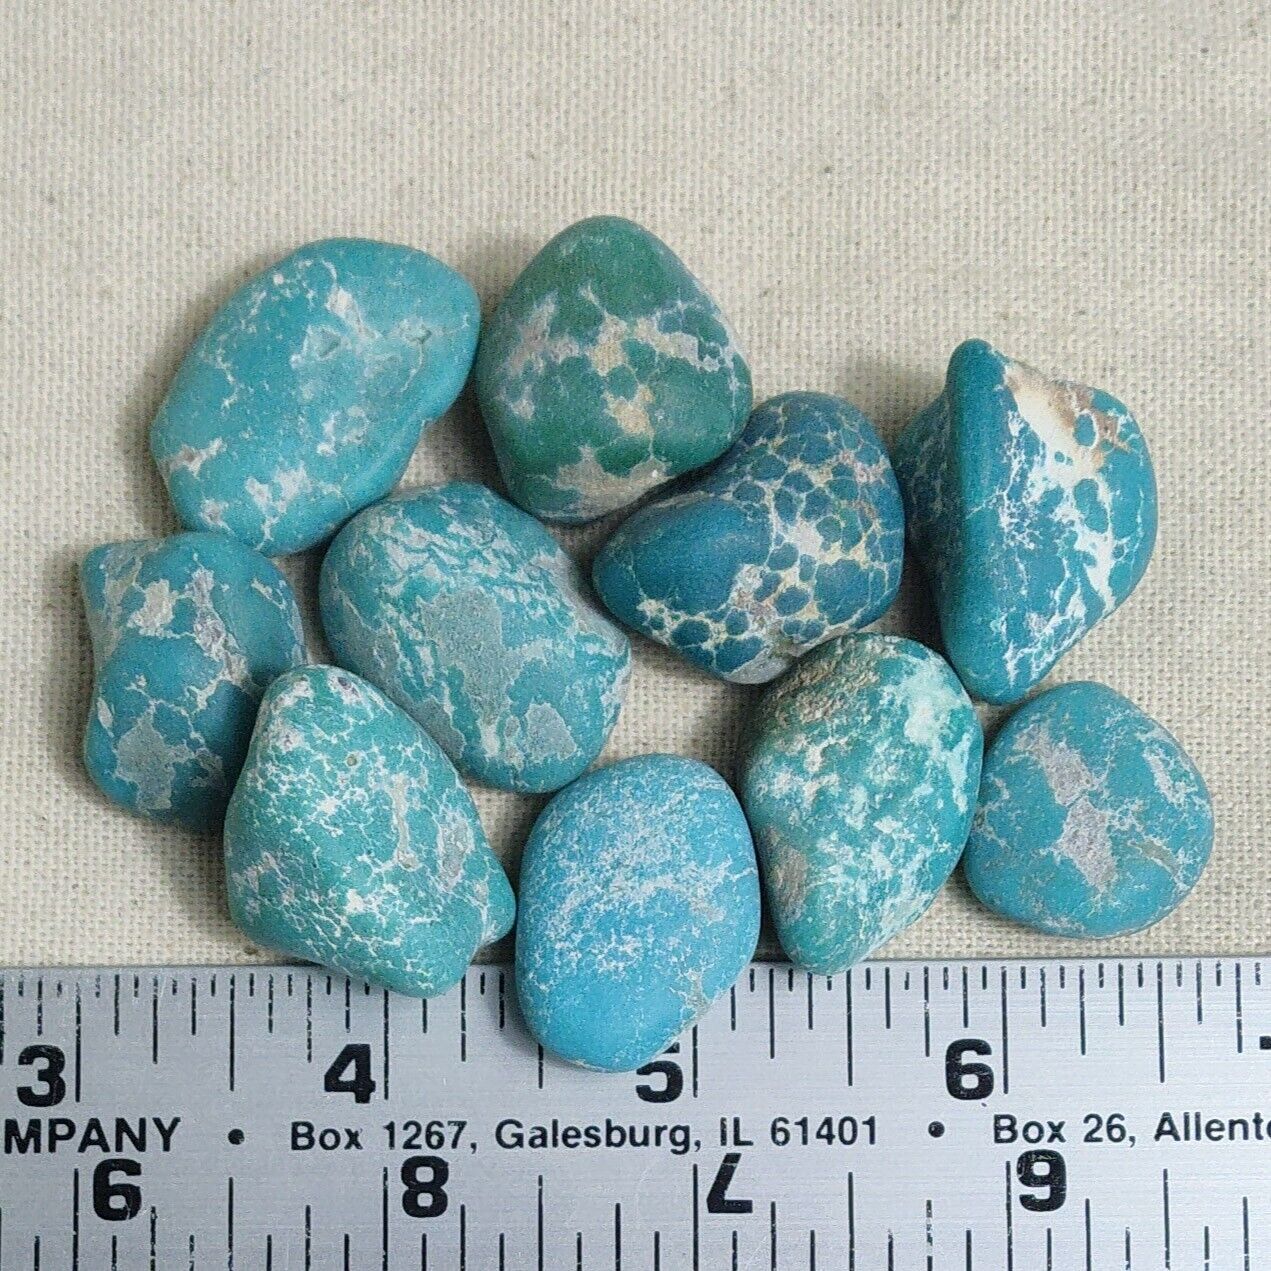 Fox Mine Blue Turquoise Rough Stone Gem 102 Gram Lot 34-19